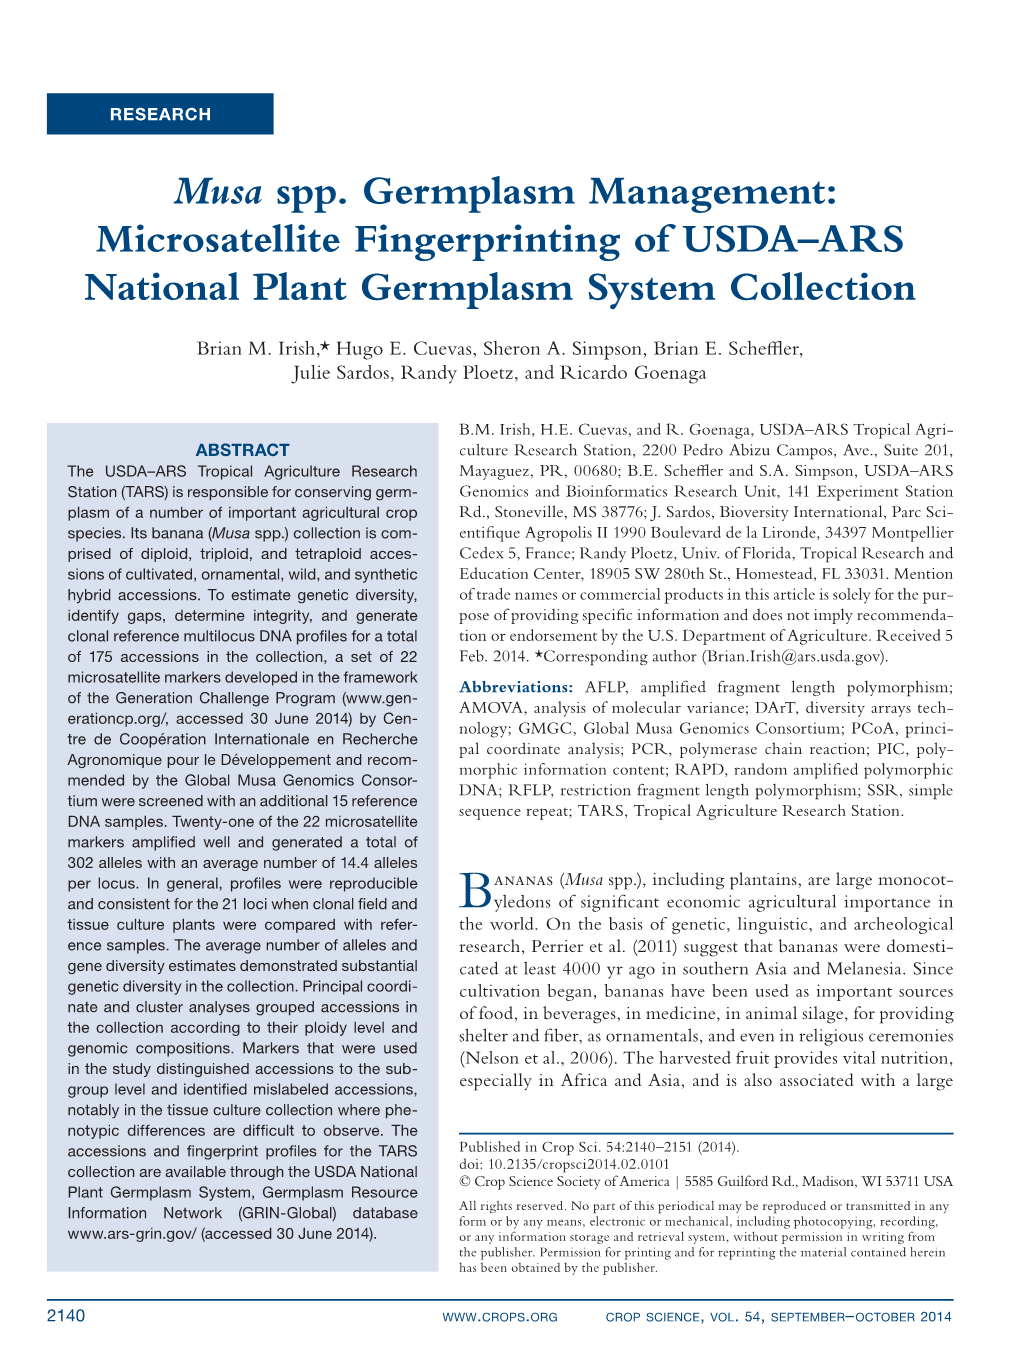 Musa Spp. Germplasm Management: Microsatellite Fingerprinting of USDA–ARS National Plant Germplasm System Collection